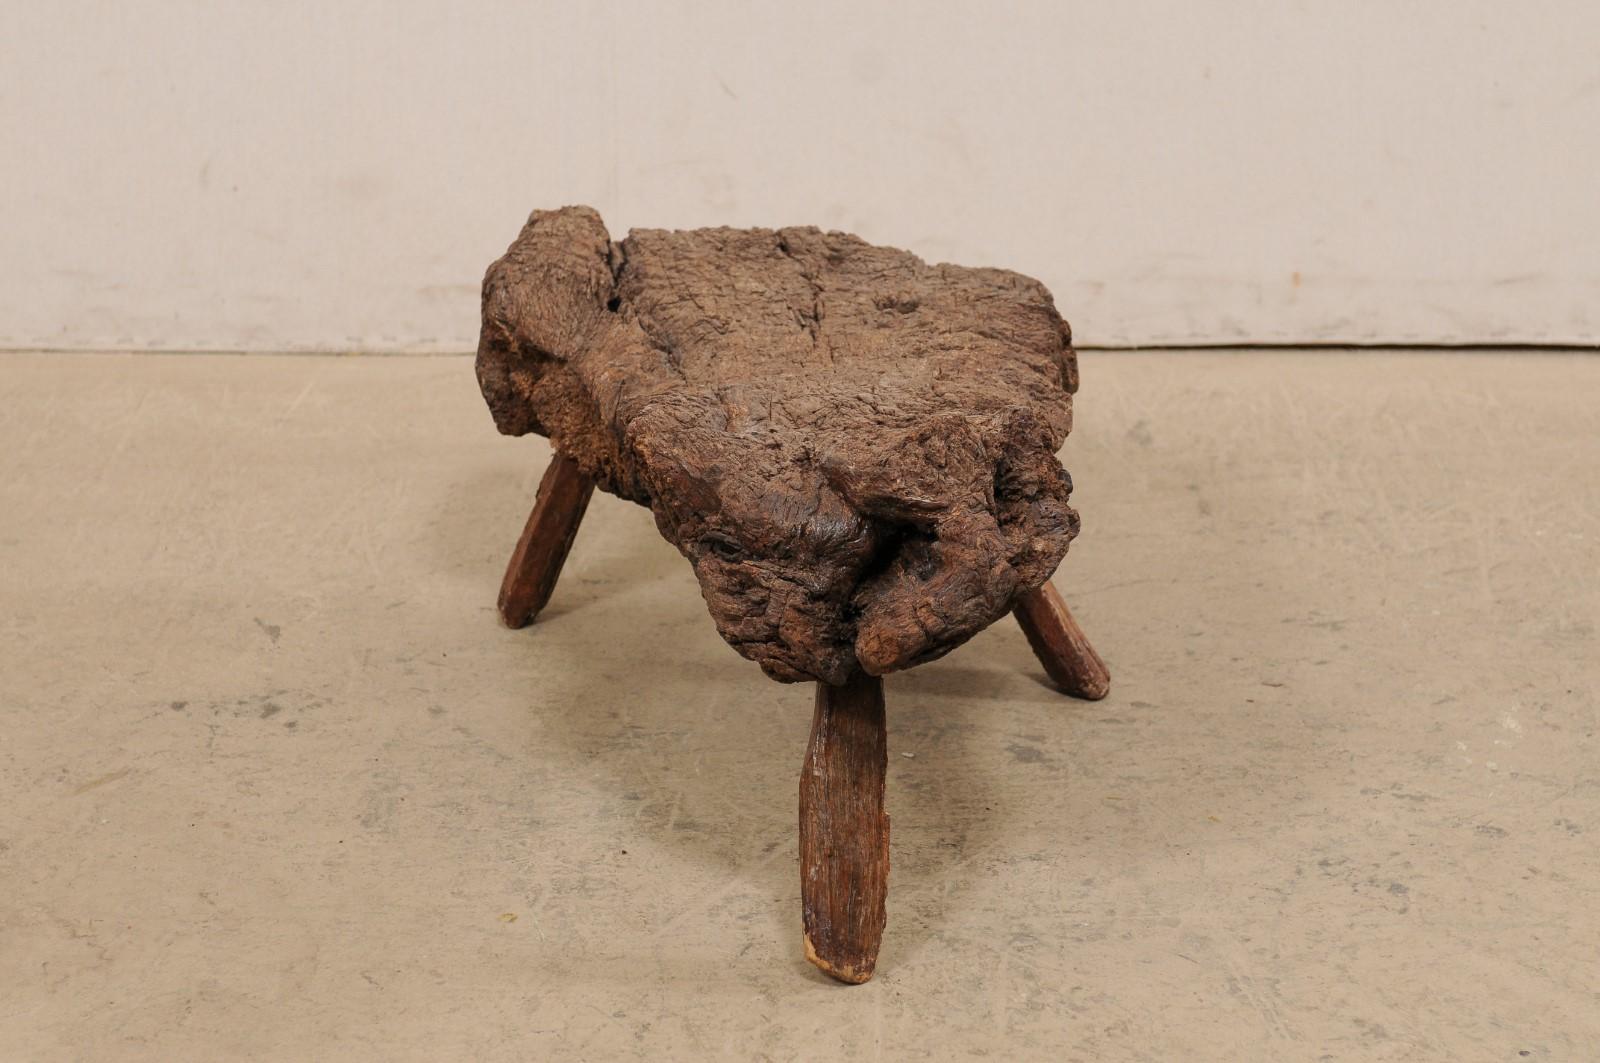 Spanish Petite-Sized Knobby Live-Edge Burl Wood Table or Stool on Limb Legs 7